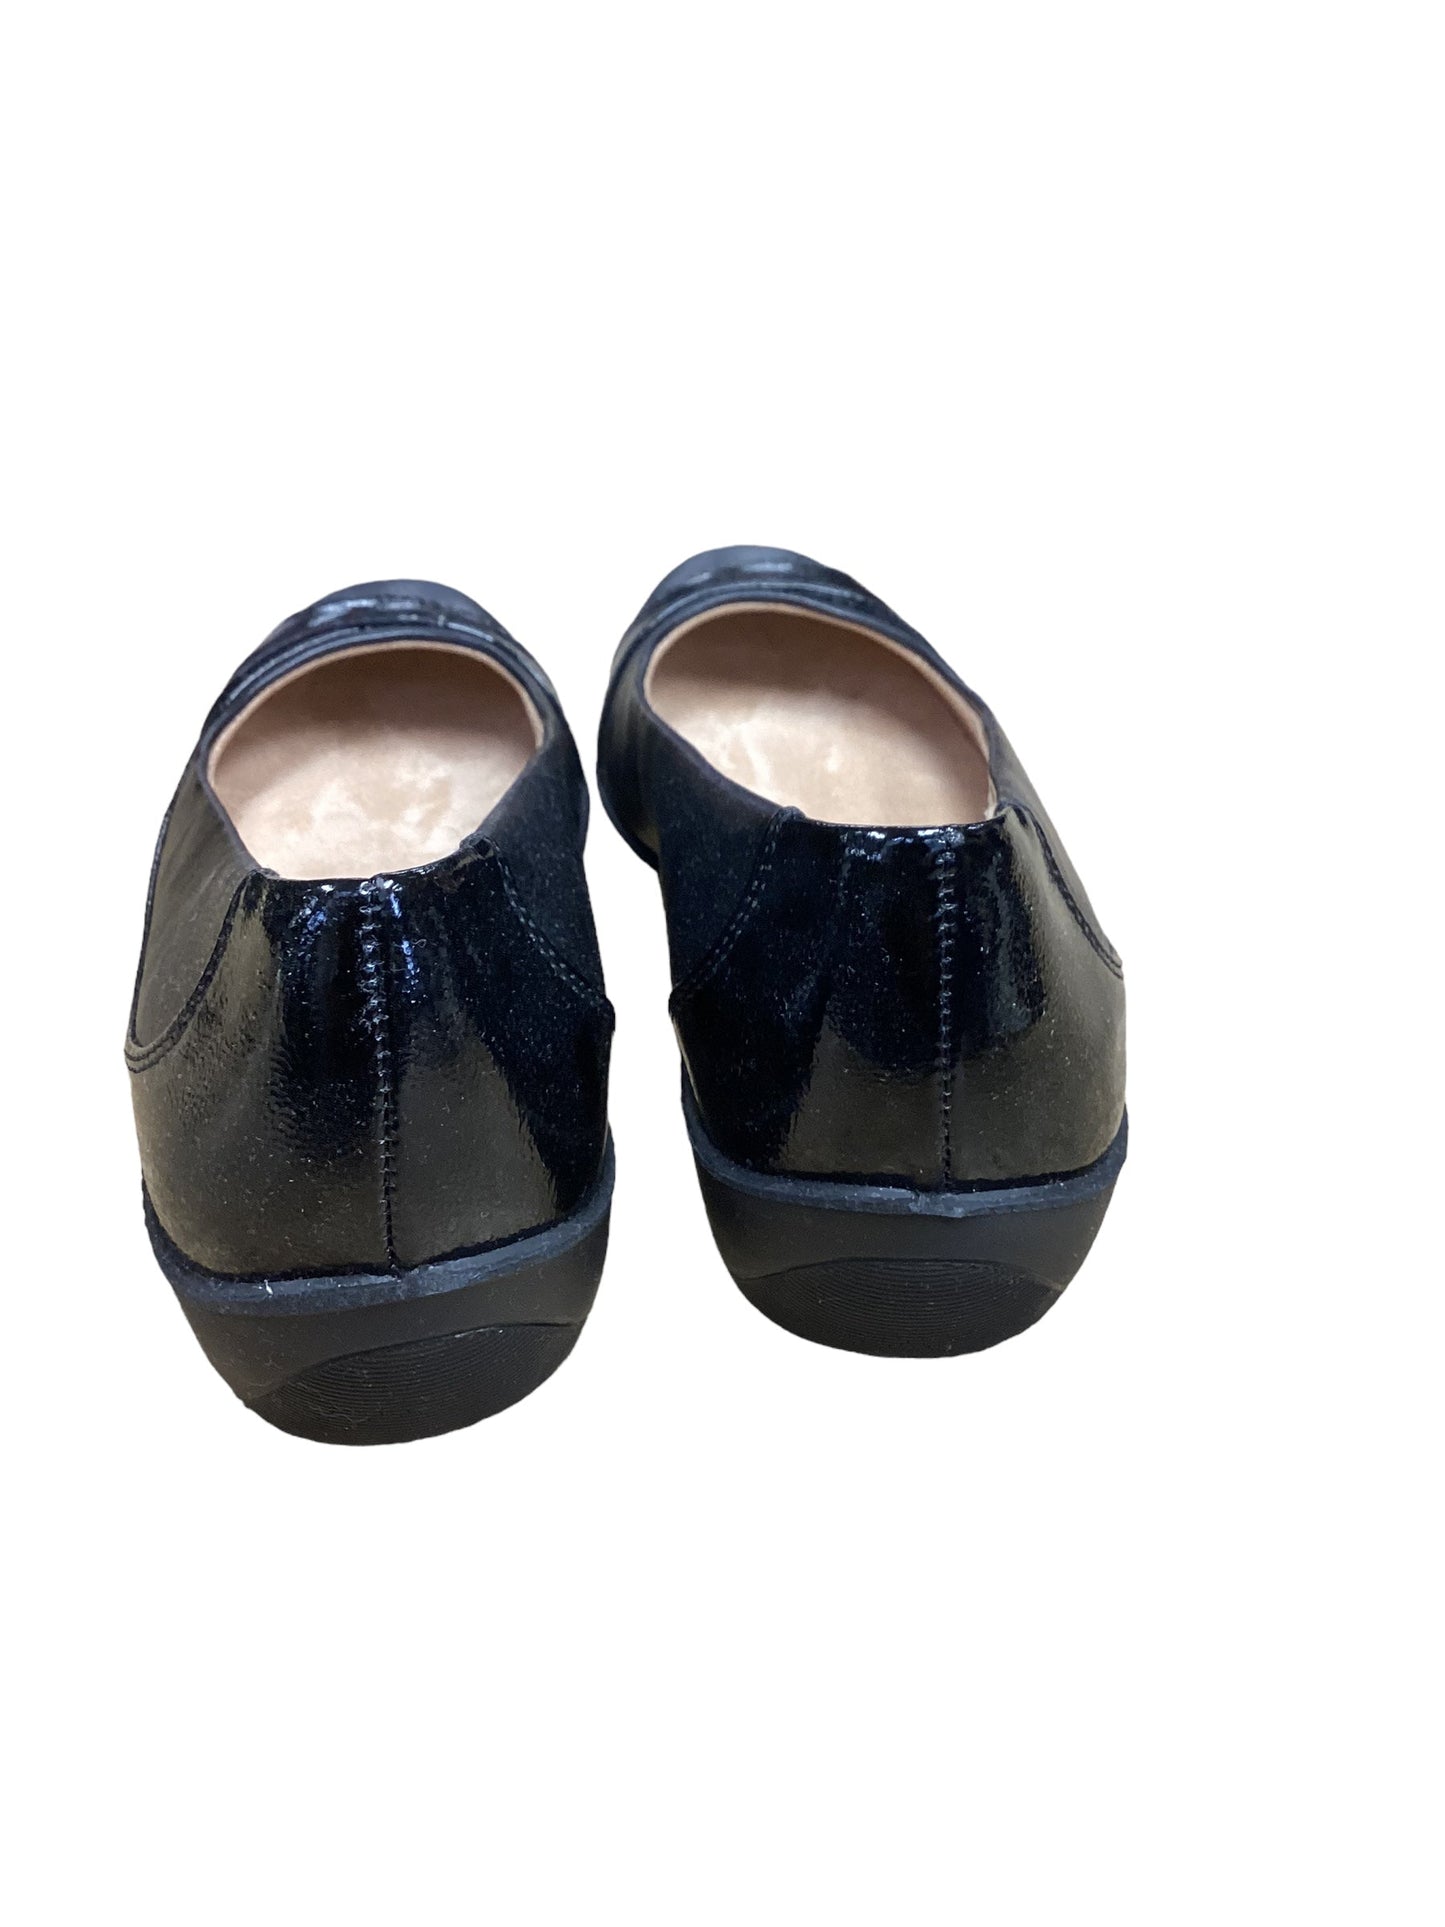 Black Shoes Flats Life Stride, Size 7.5